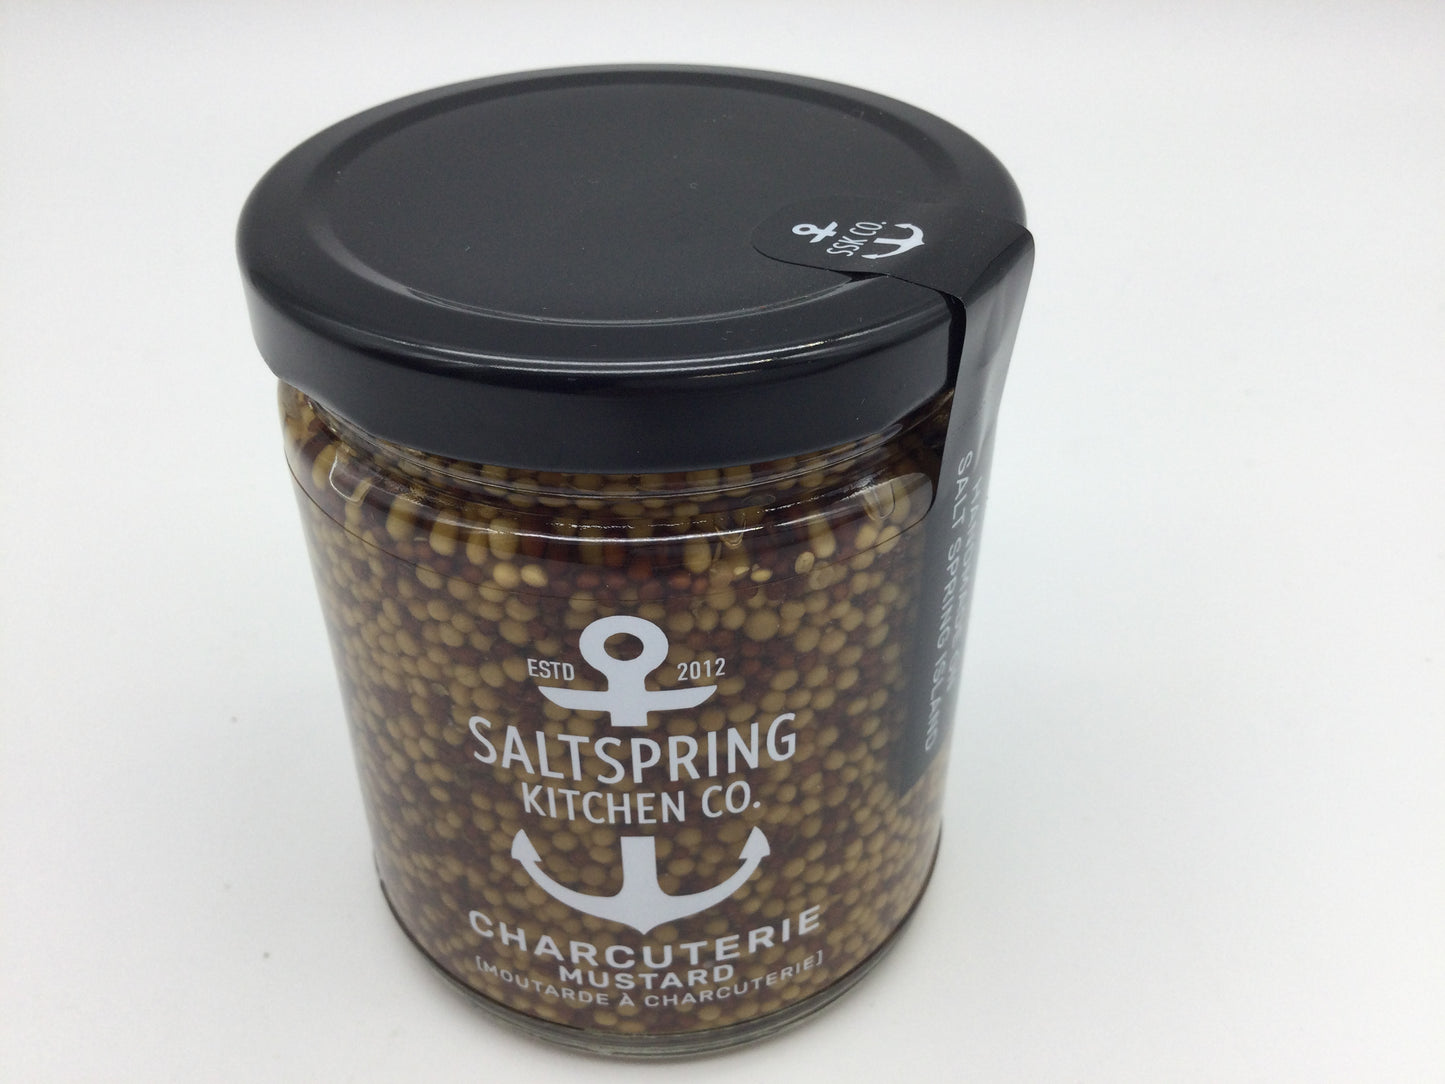 Salt Spring Kitchen Company - Charcuterie Mustard Spread